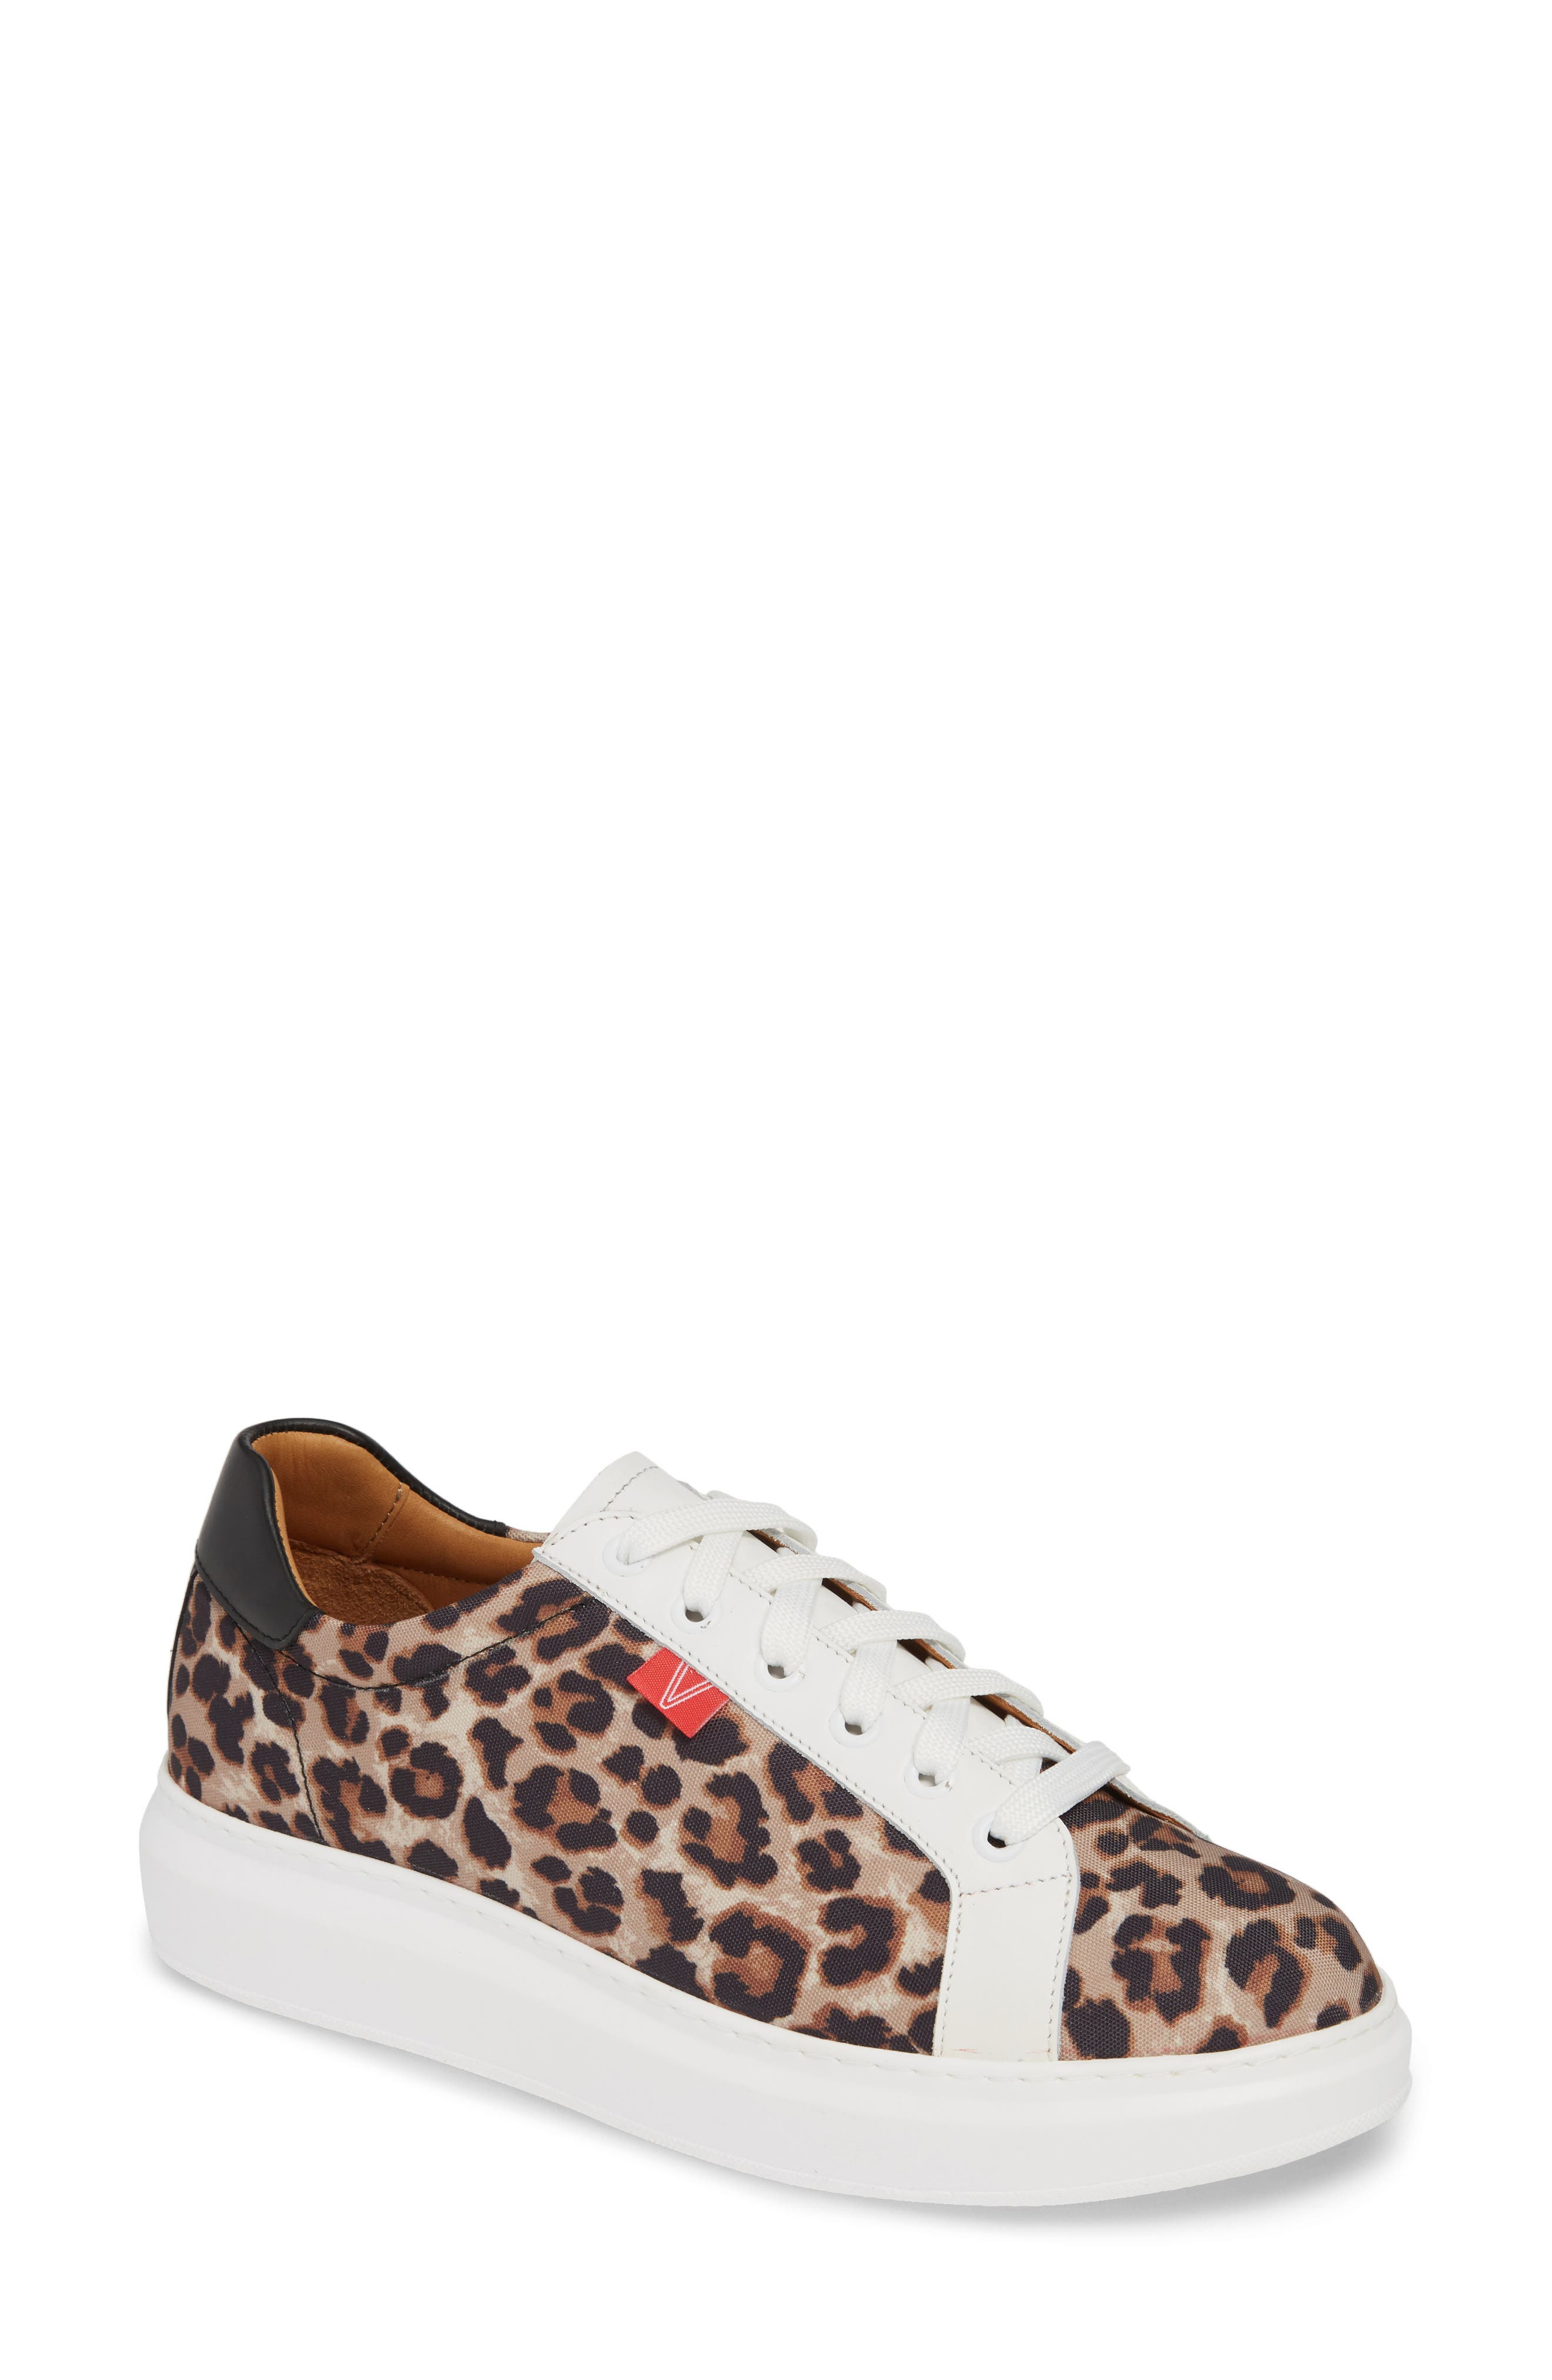 veronica beard leopard shoes